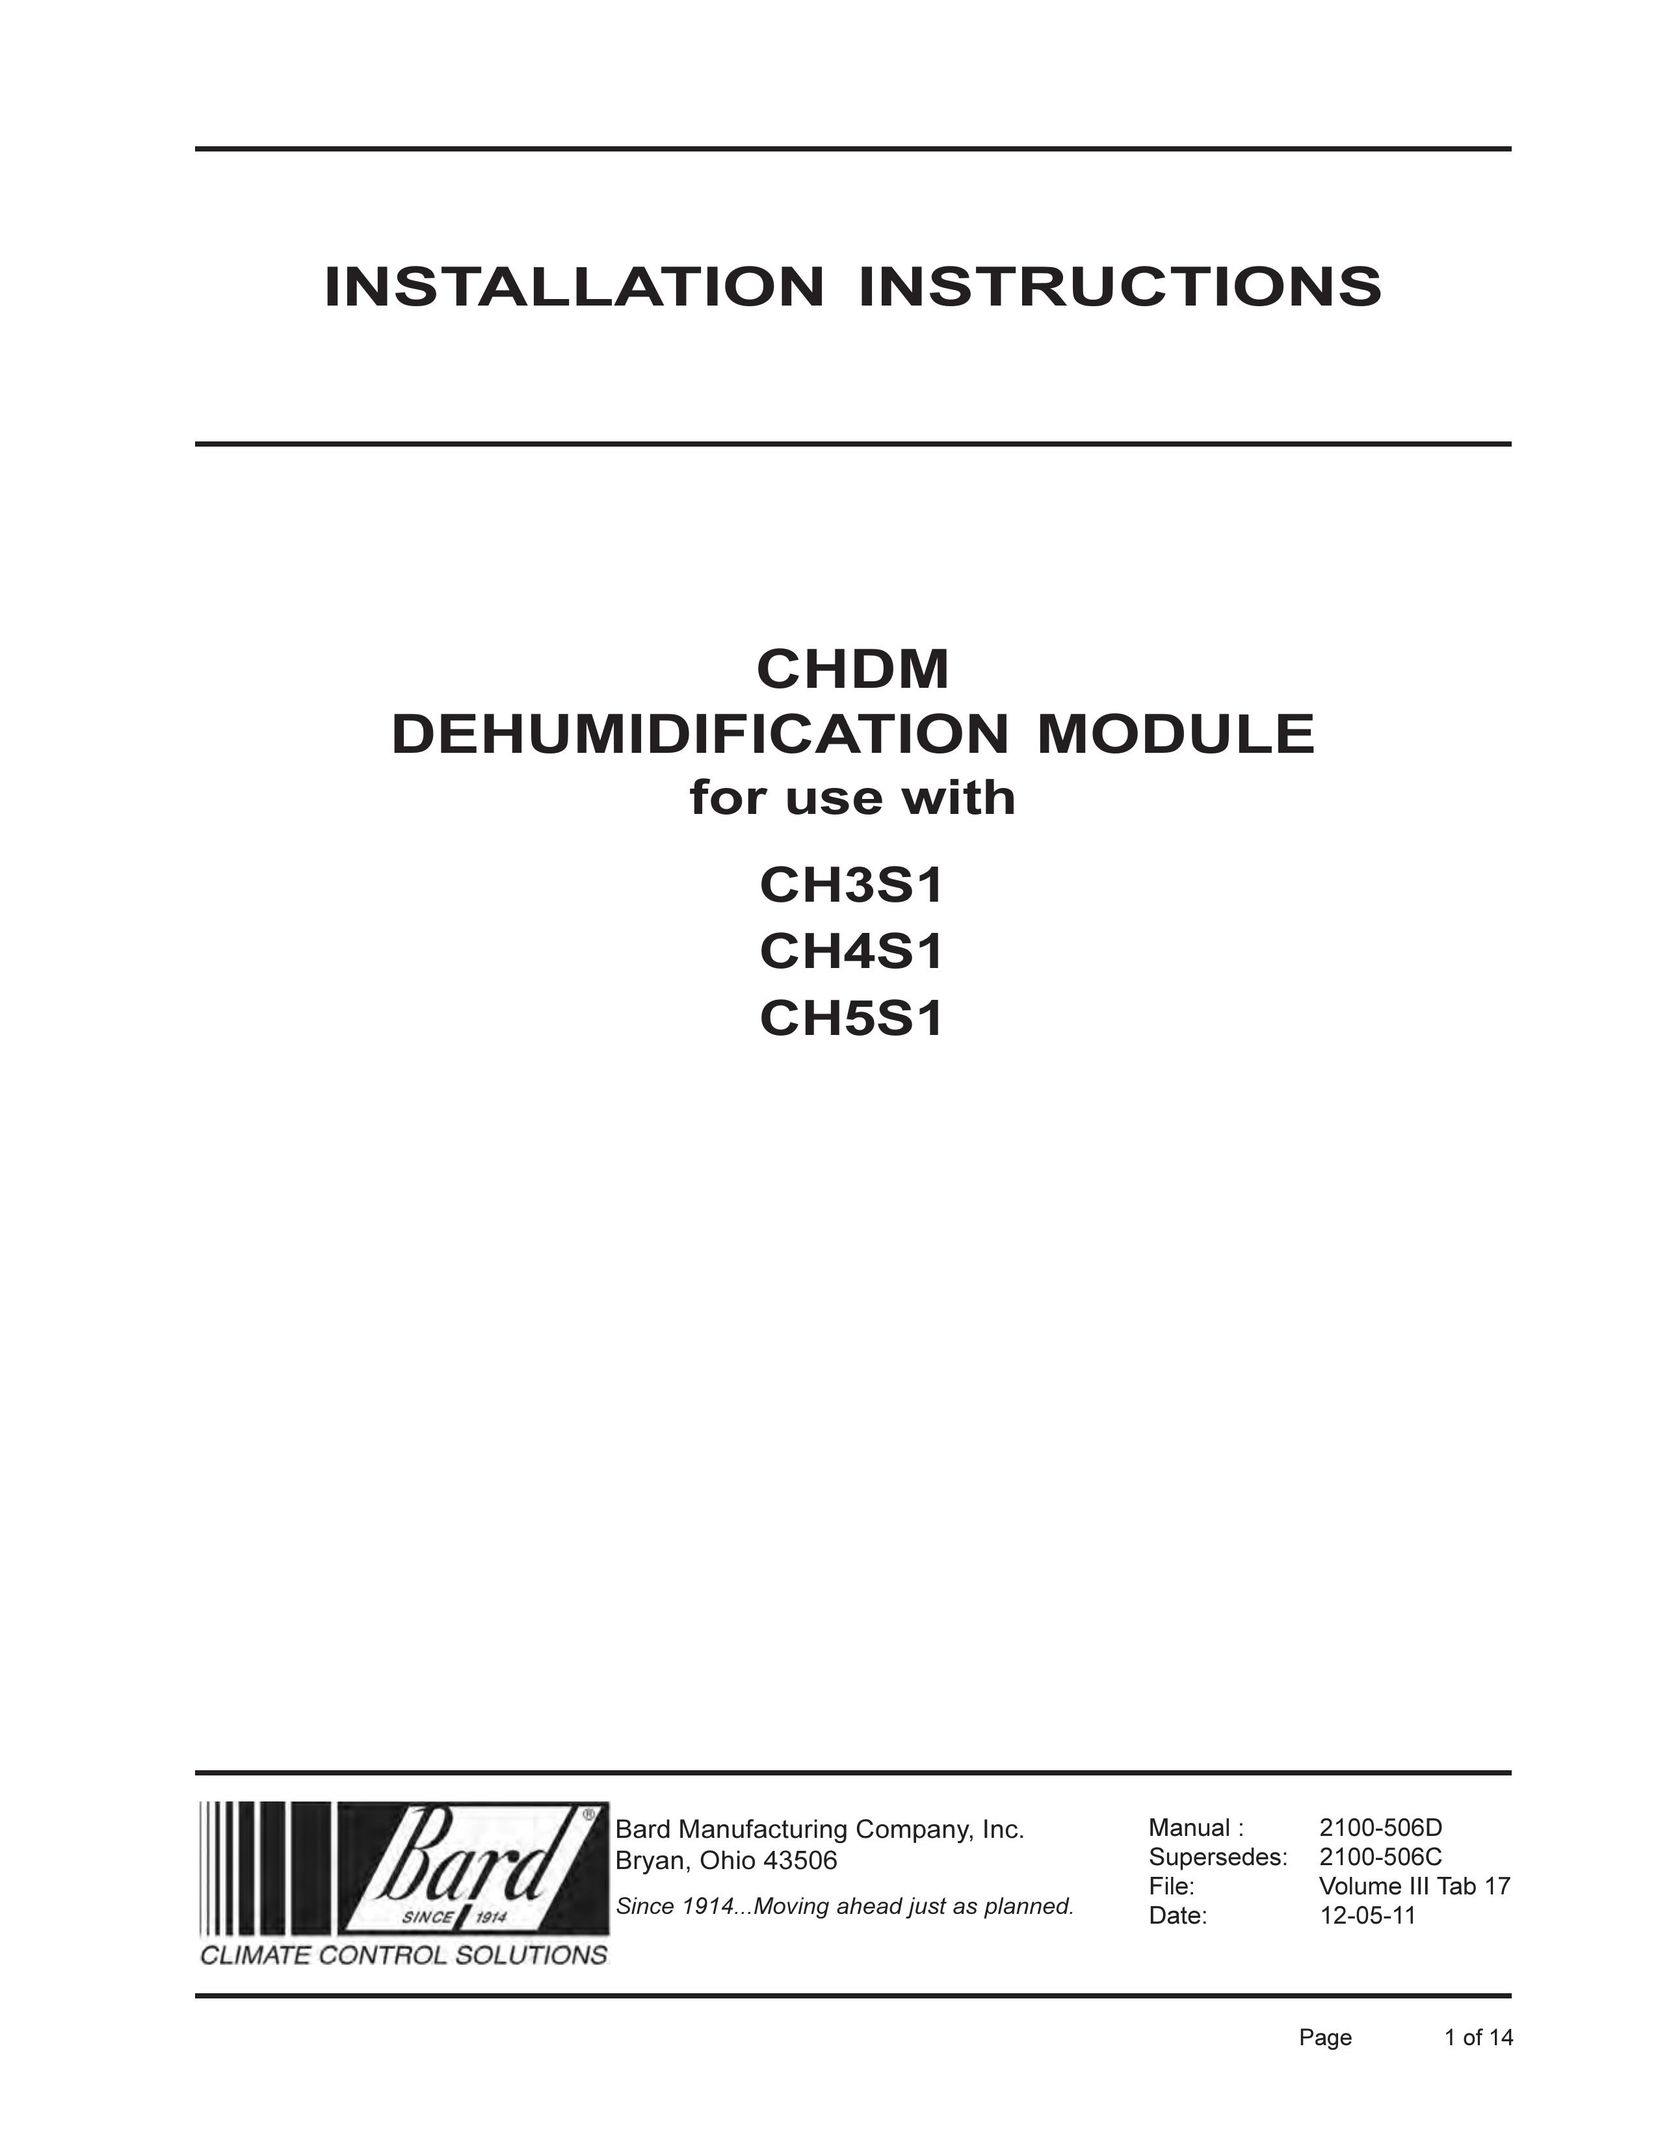 Bard CH3S1 Dehumidifier User Manual